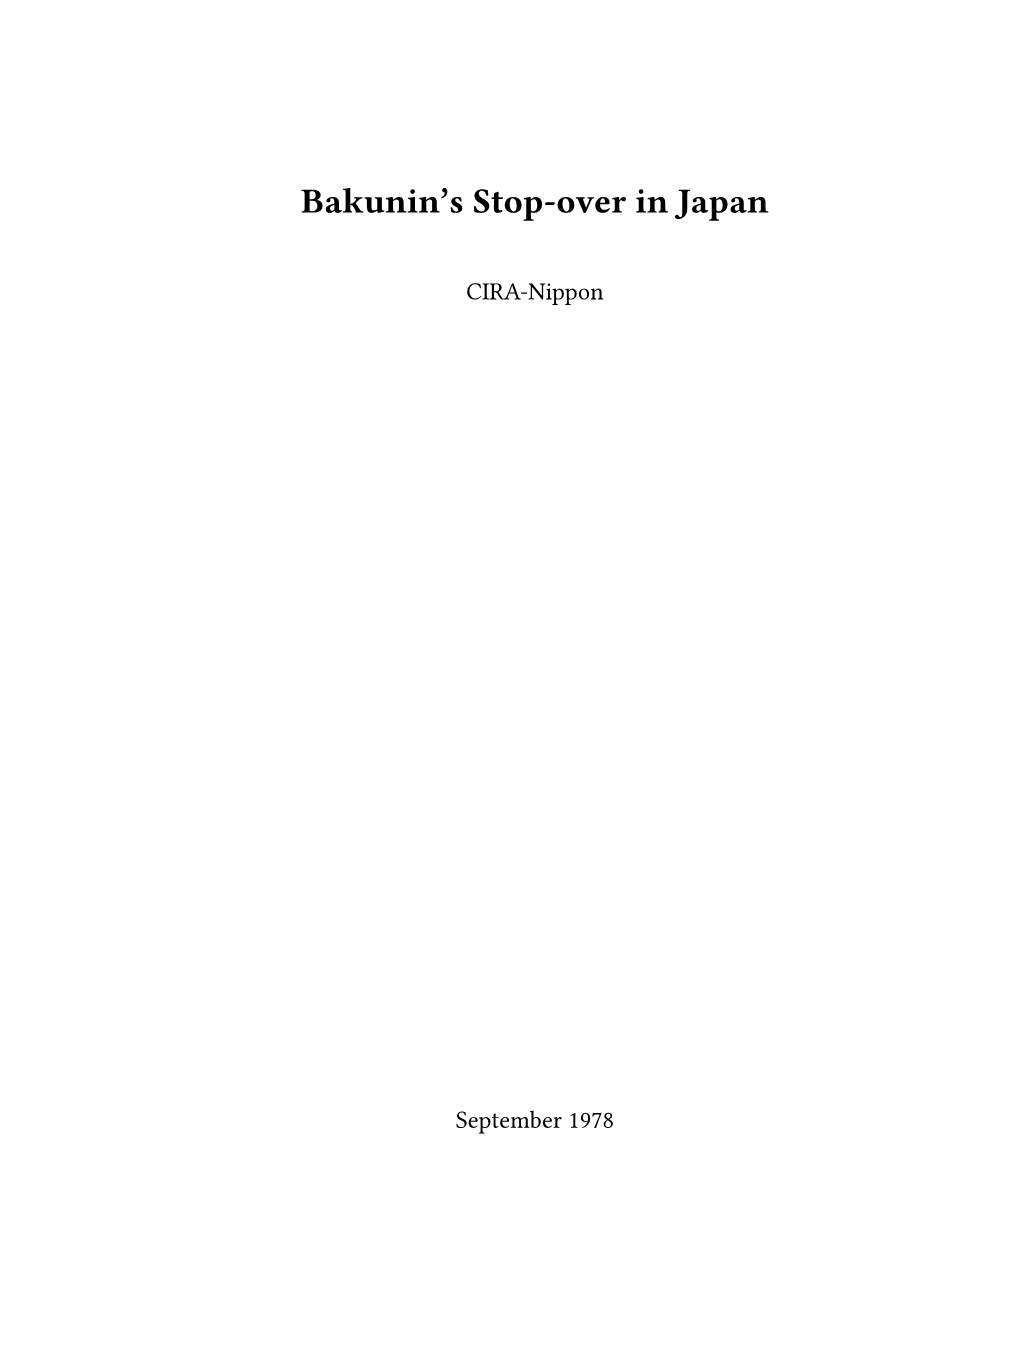 Bakunin's Stop-Over in Japan September 1978